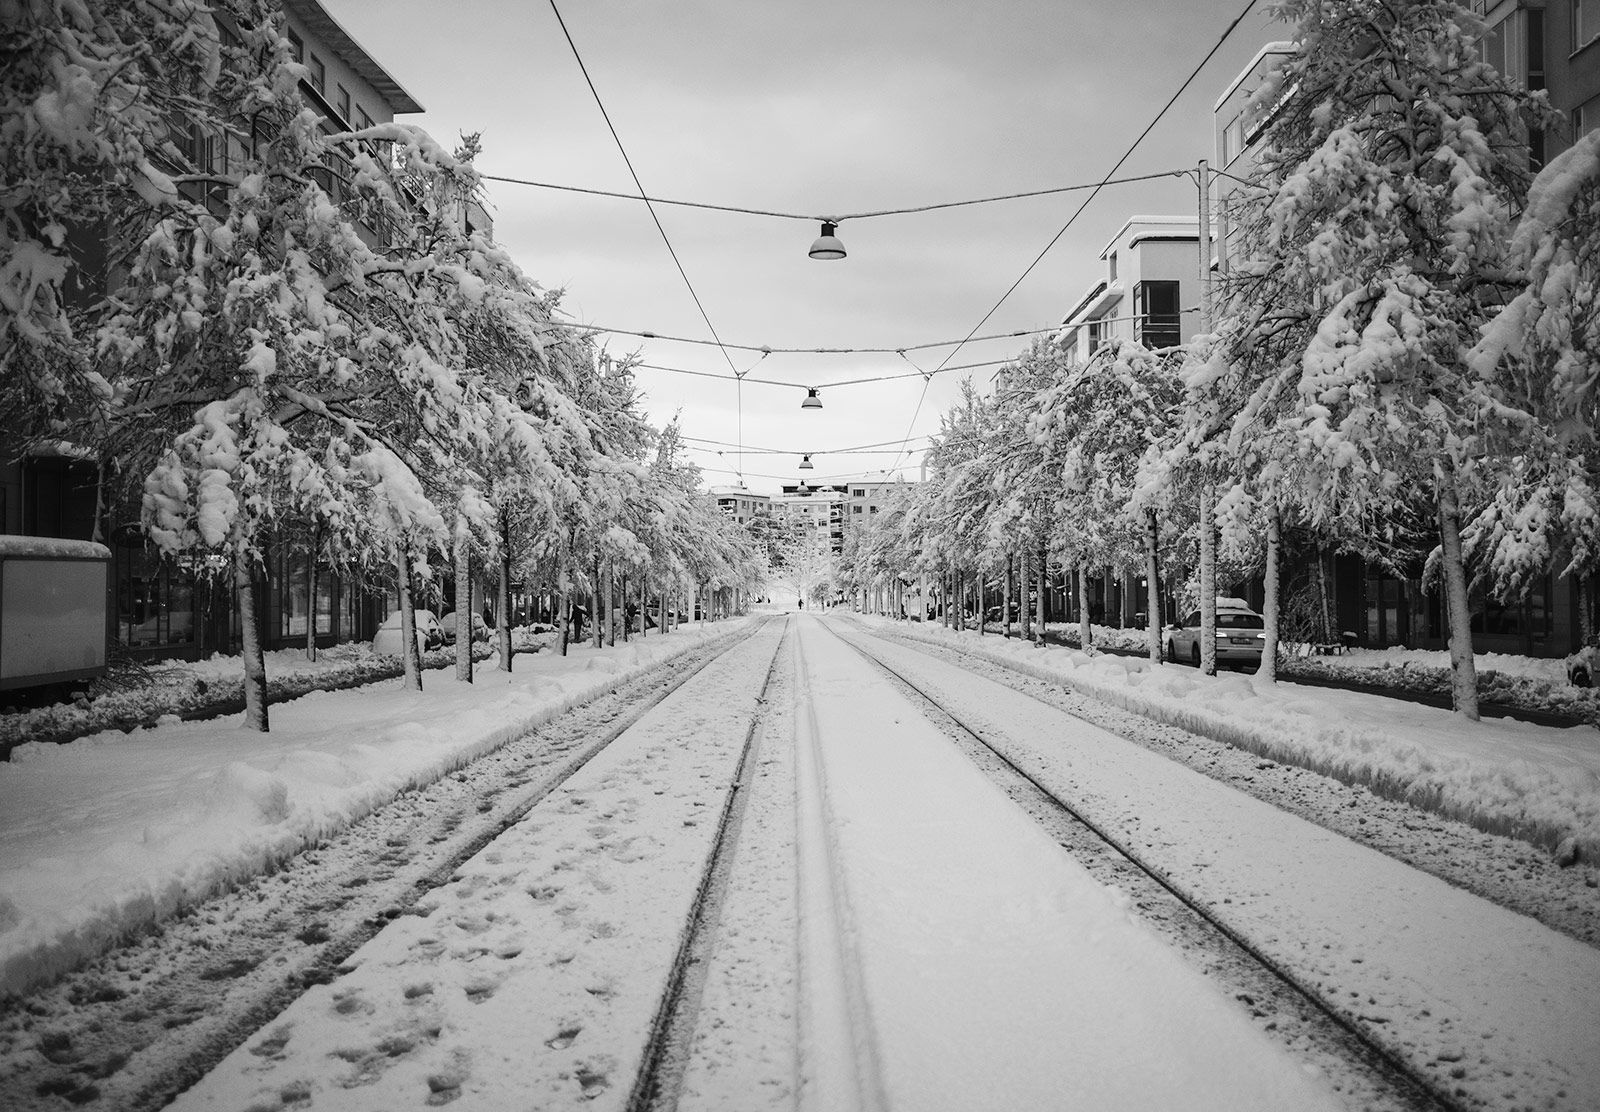 Snow on tramlines